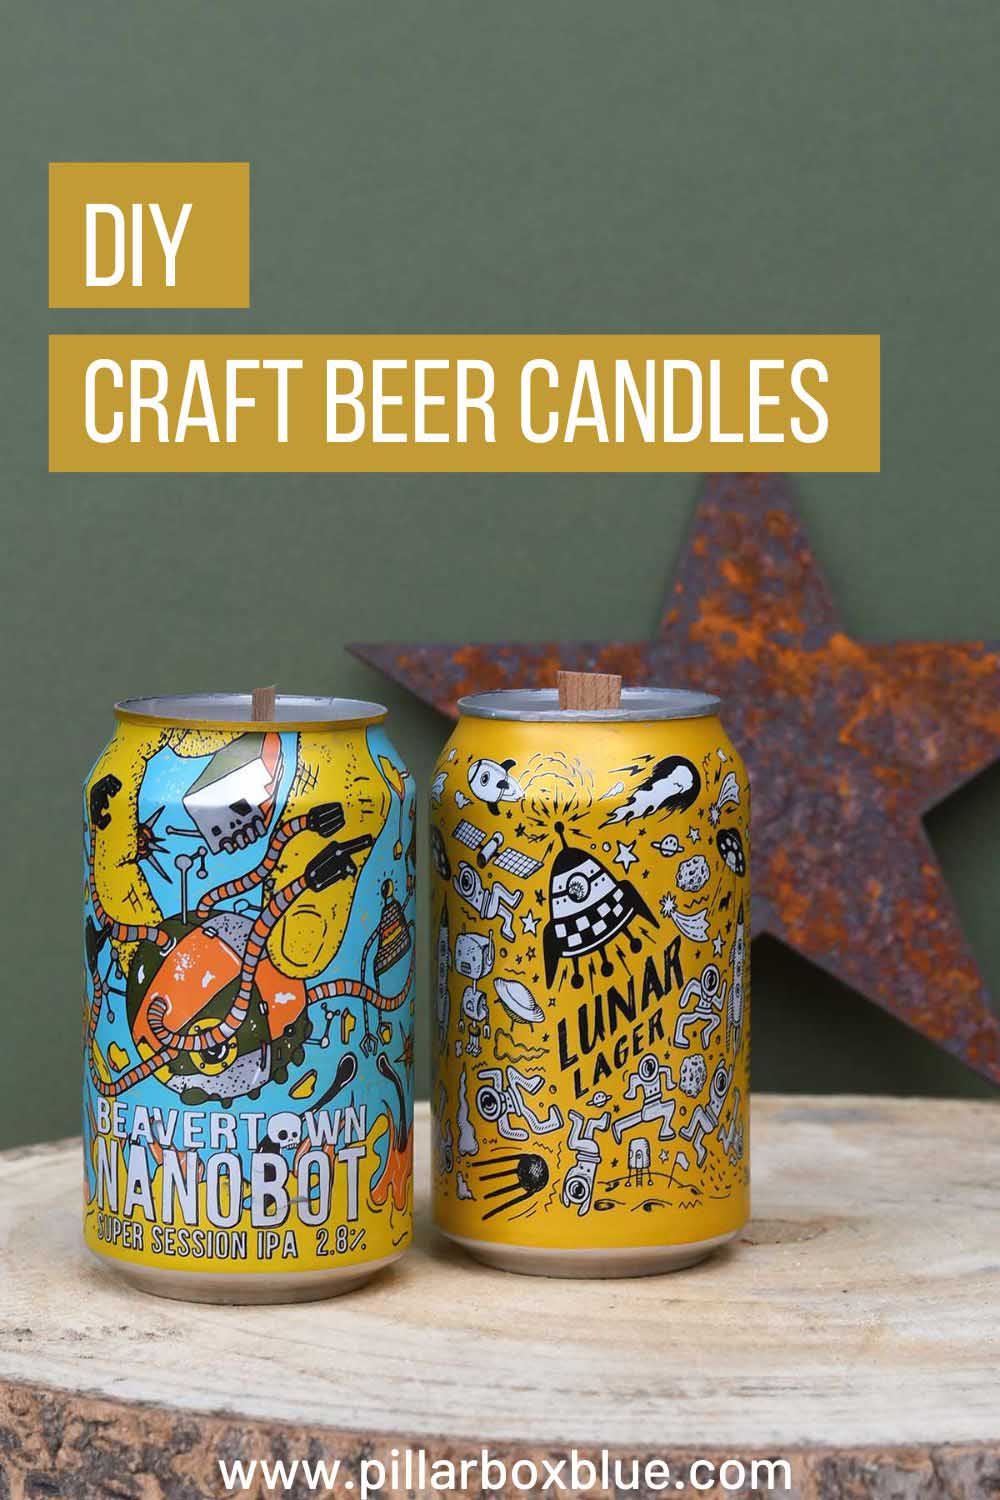 DIY craft beer candles